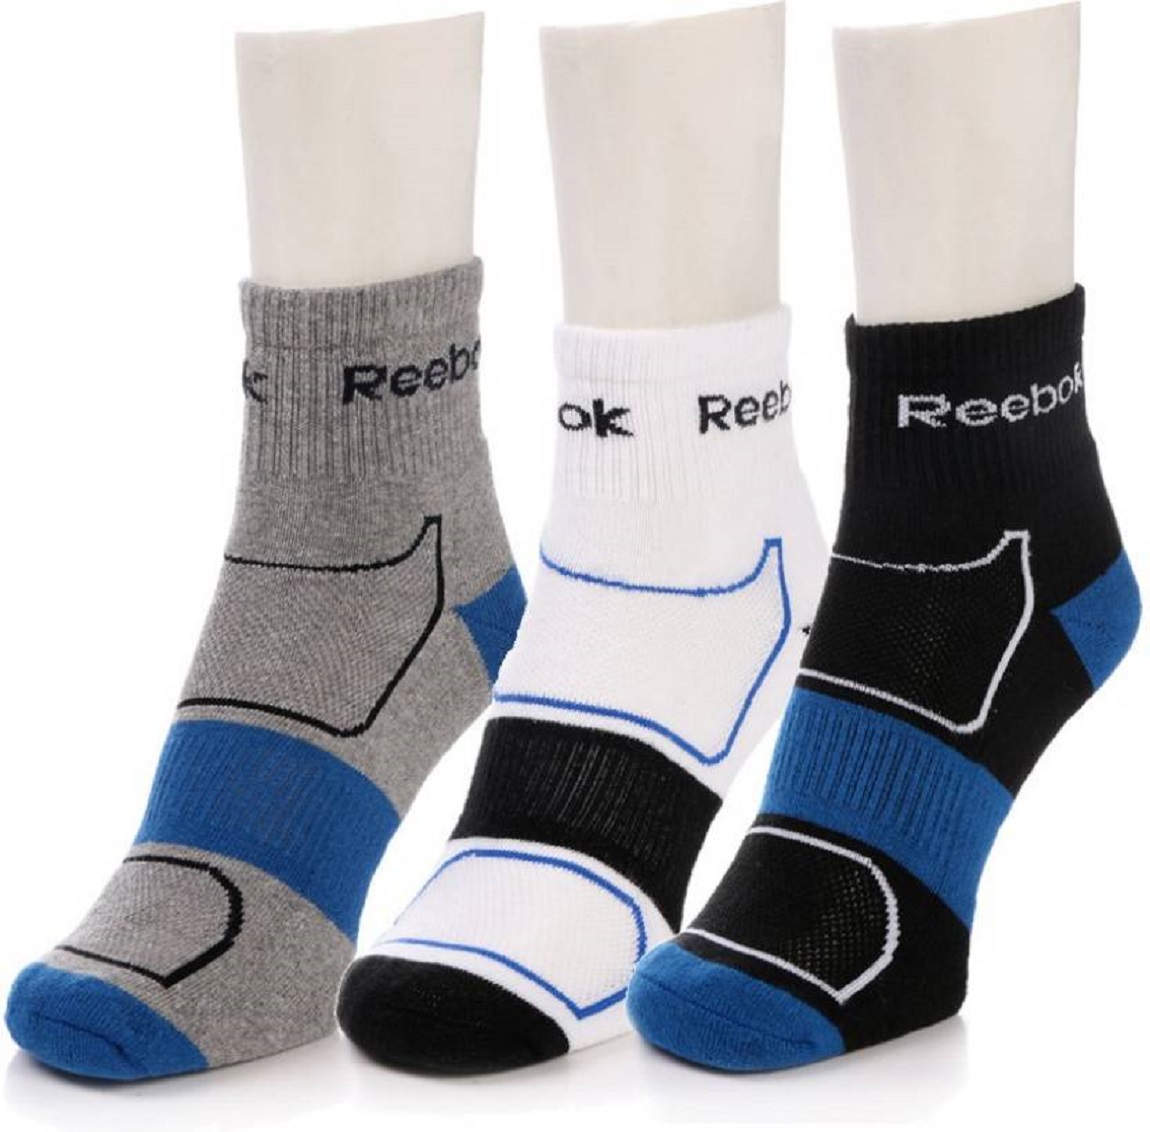 Buy Reebok Unisex Ankle Socks - Pack of 3 Online @ ₹399 from ShopClues